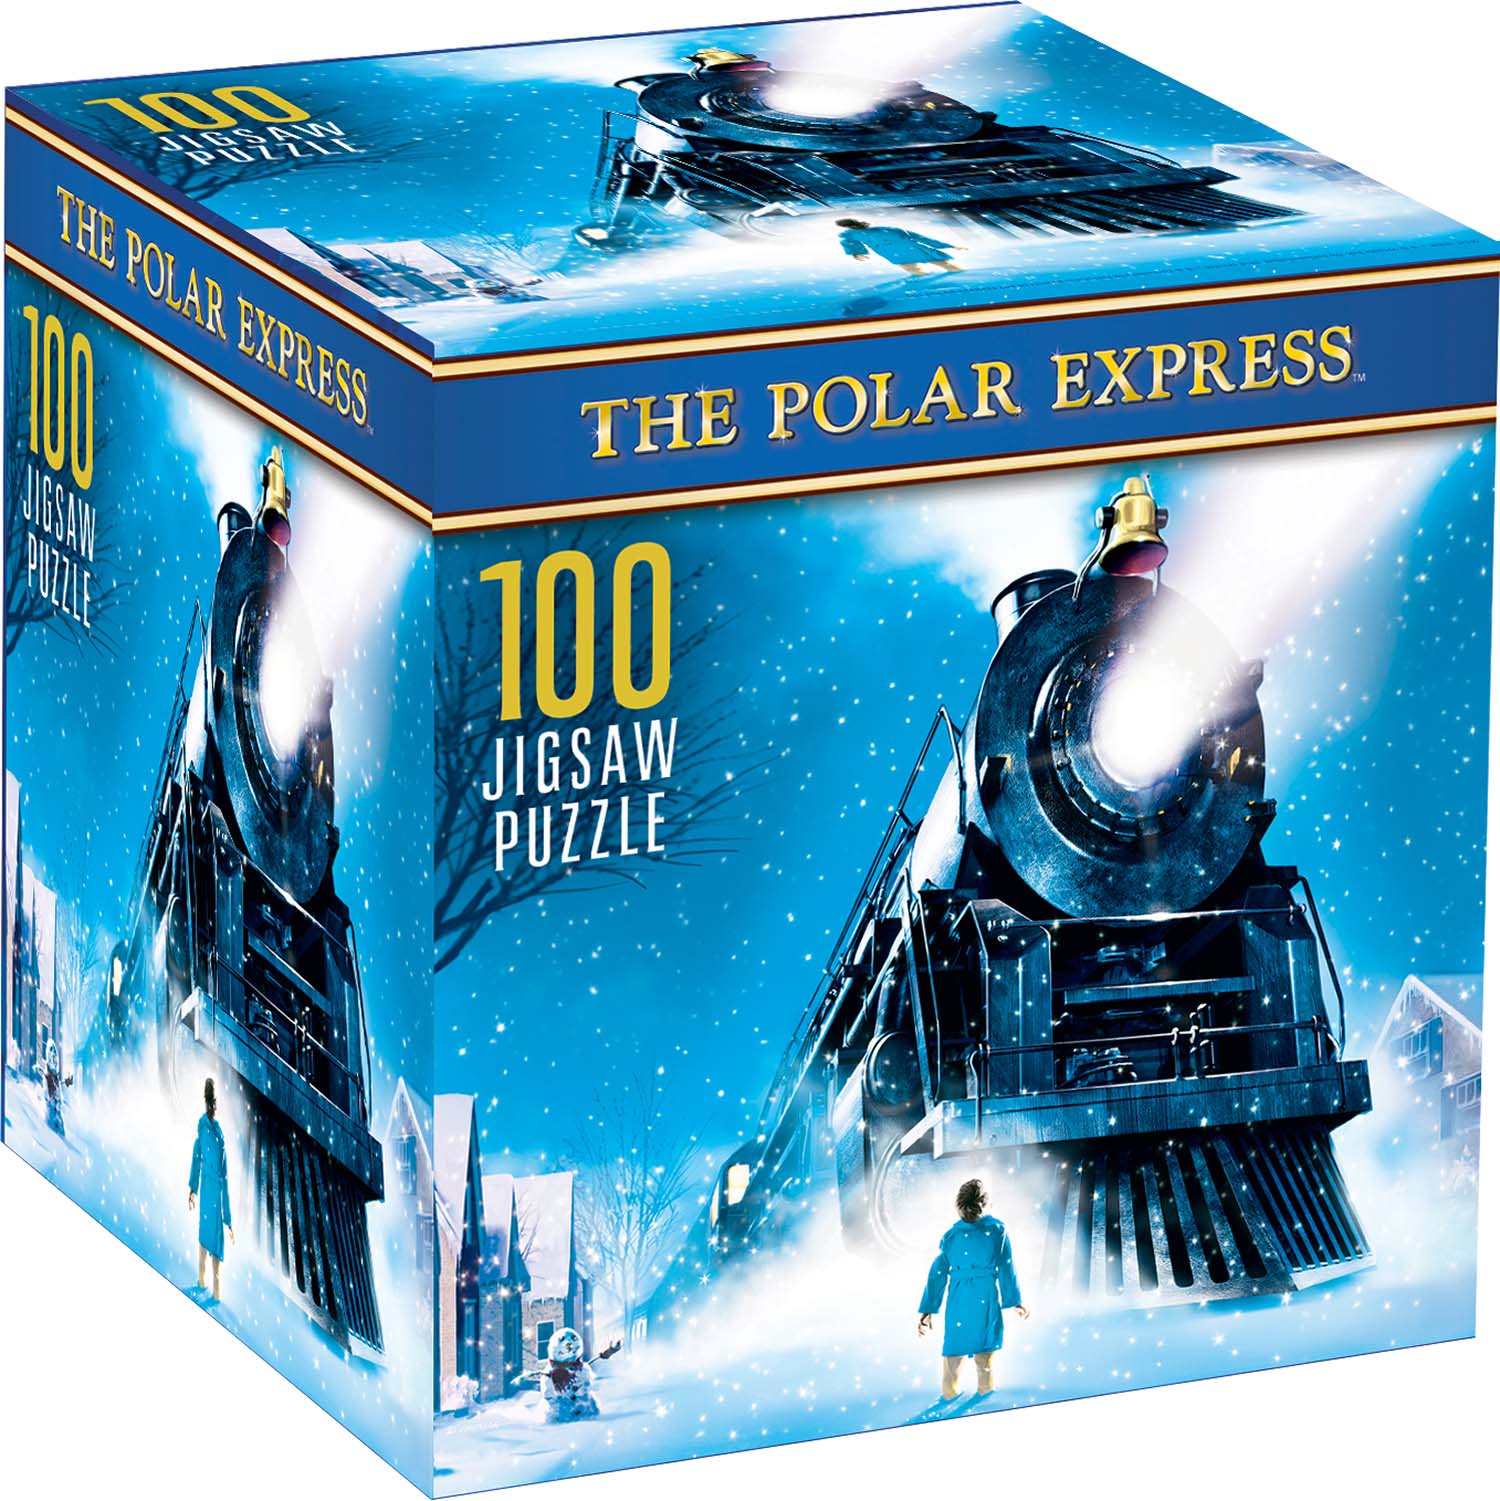 Polar Express Movies & TV Jigsaw Puzzle